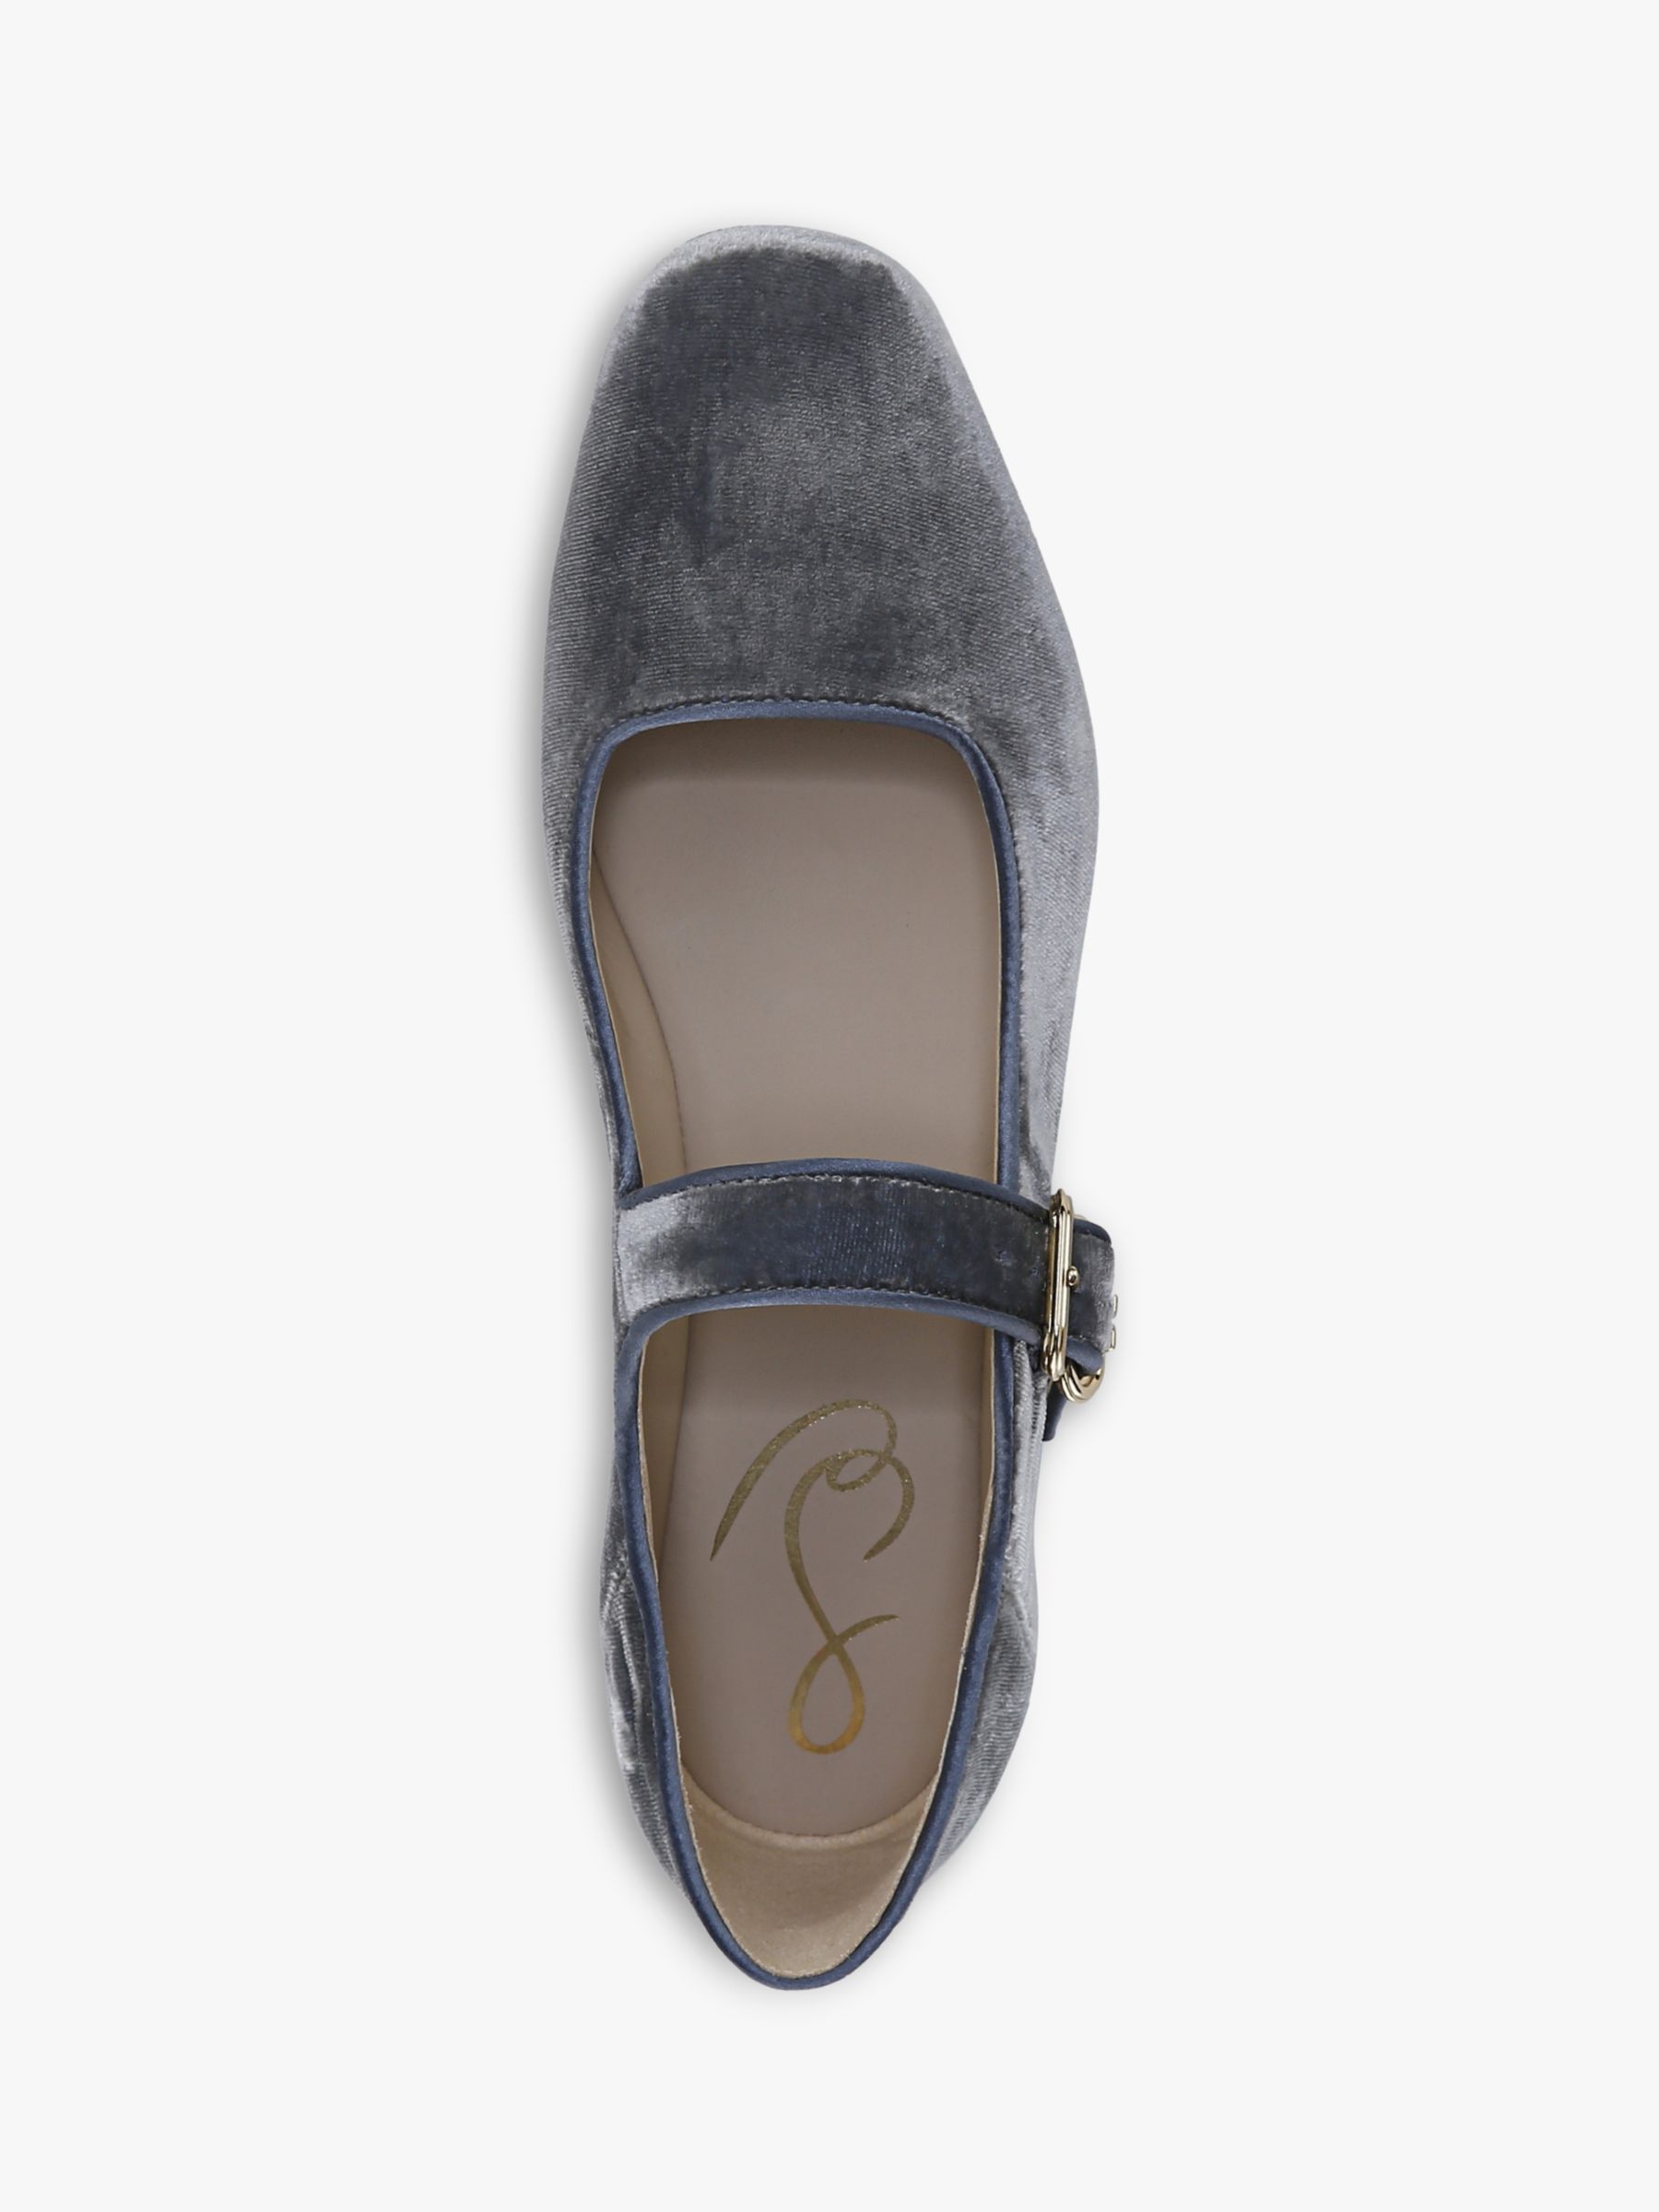 Sam Edelman Michaela Mary Jane Shoes, Smokey Blue at John Lewis & Partners